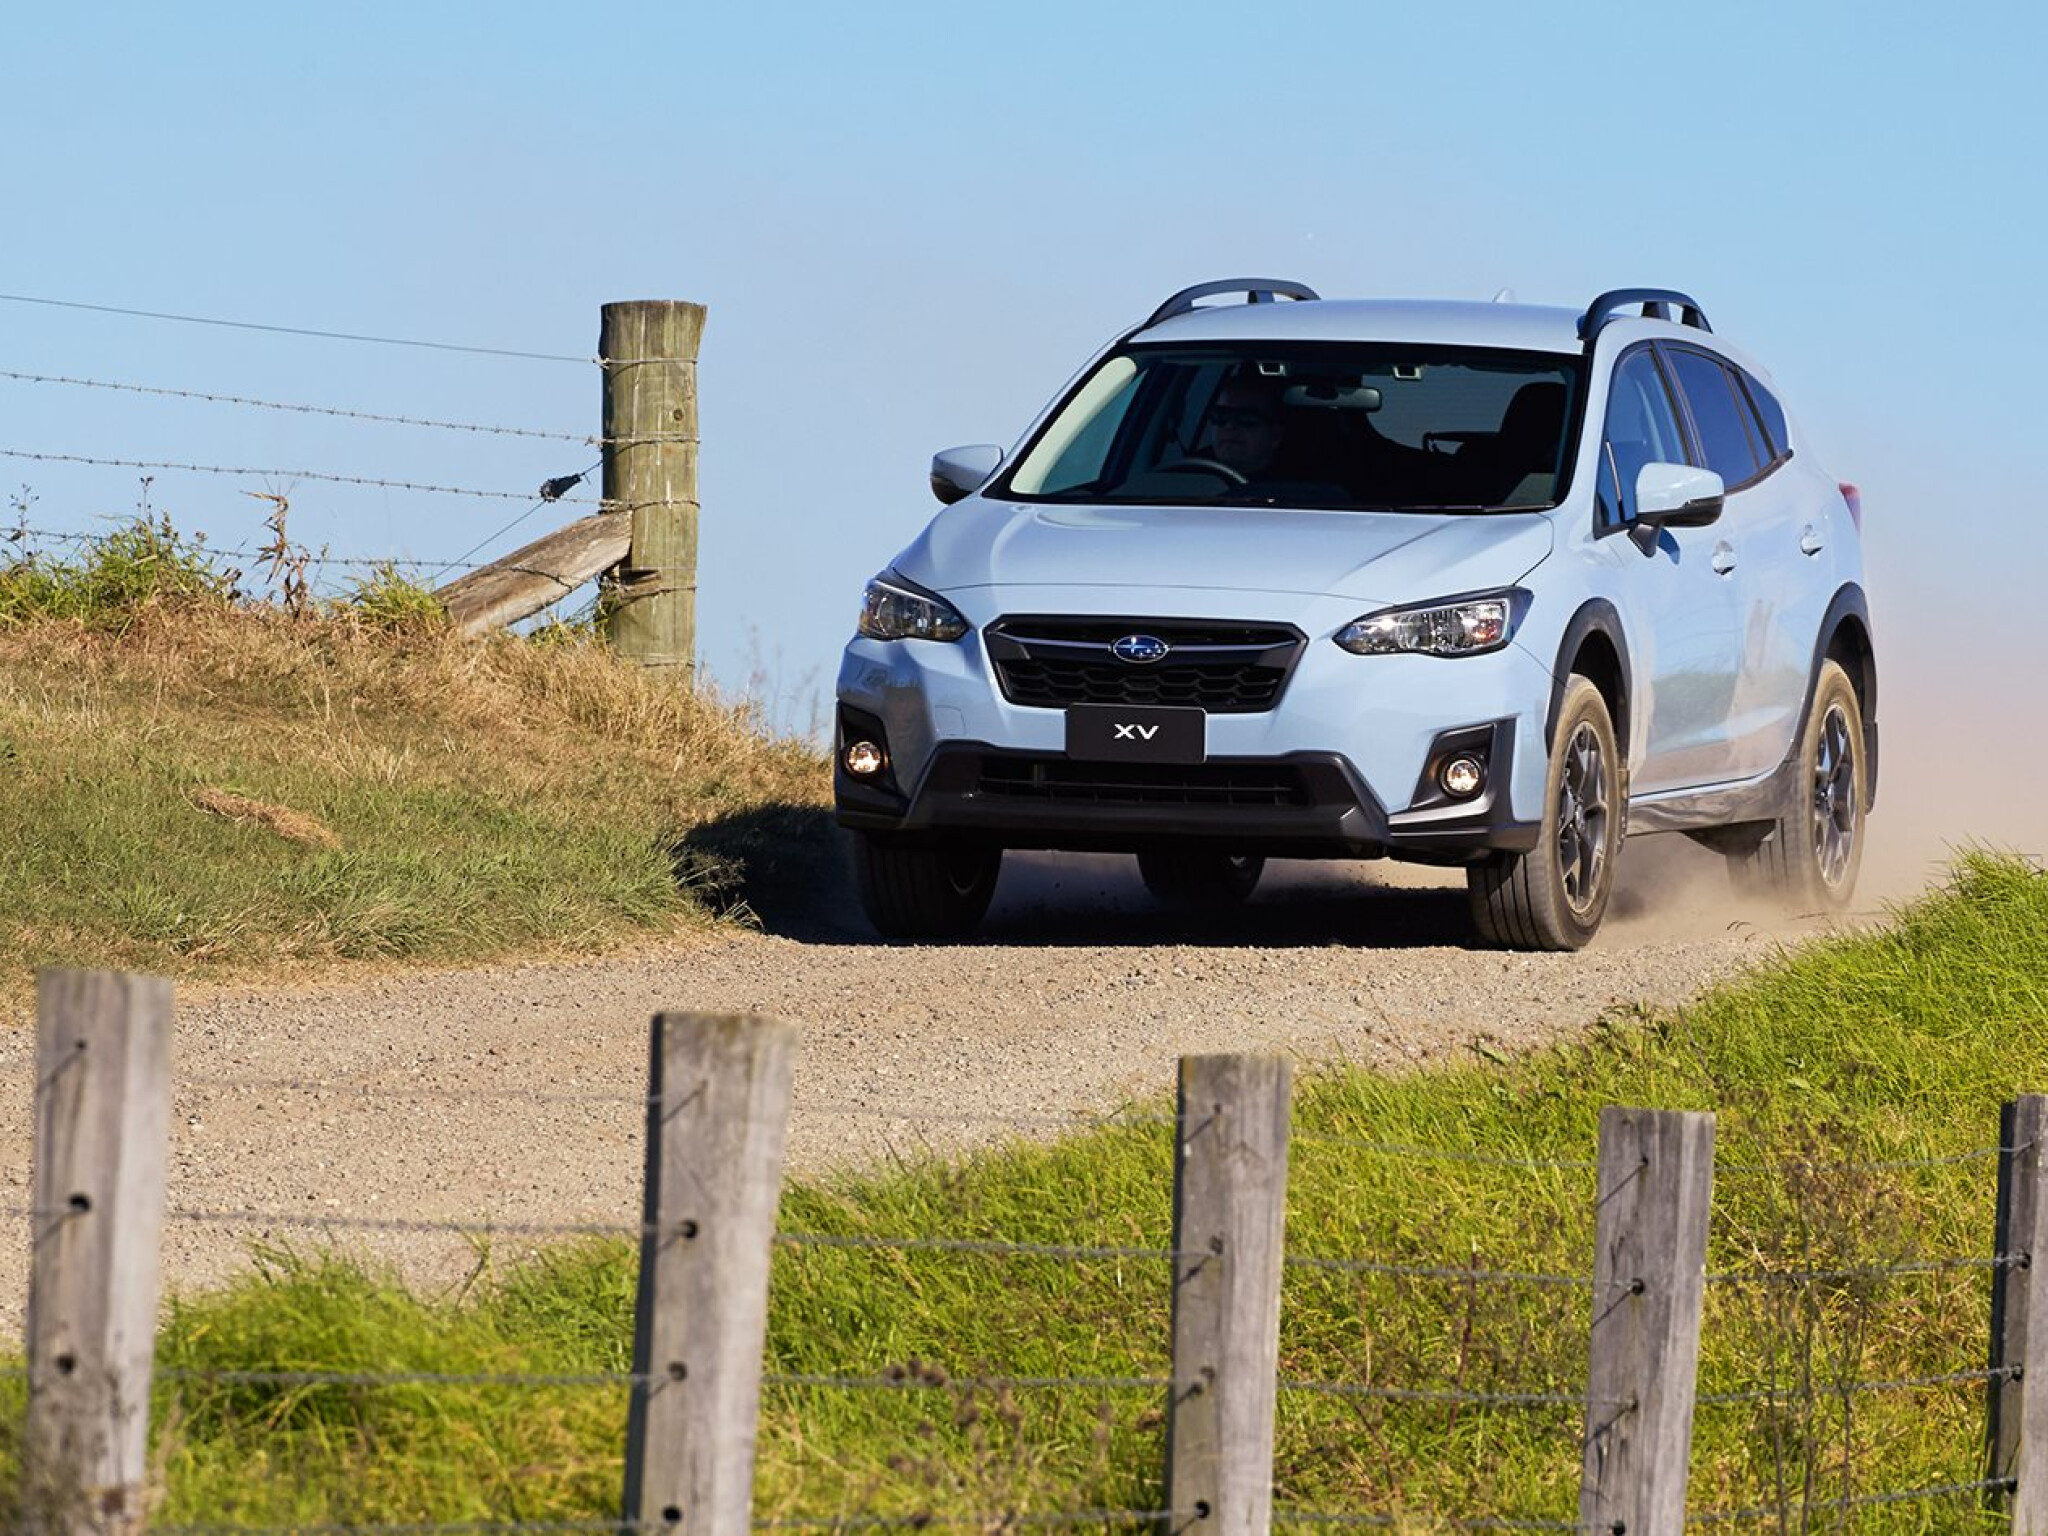 Subaru XV Review, 2020 Price & Features